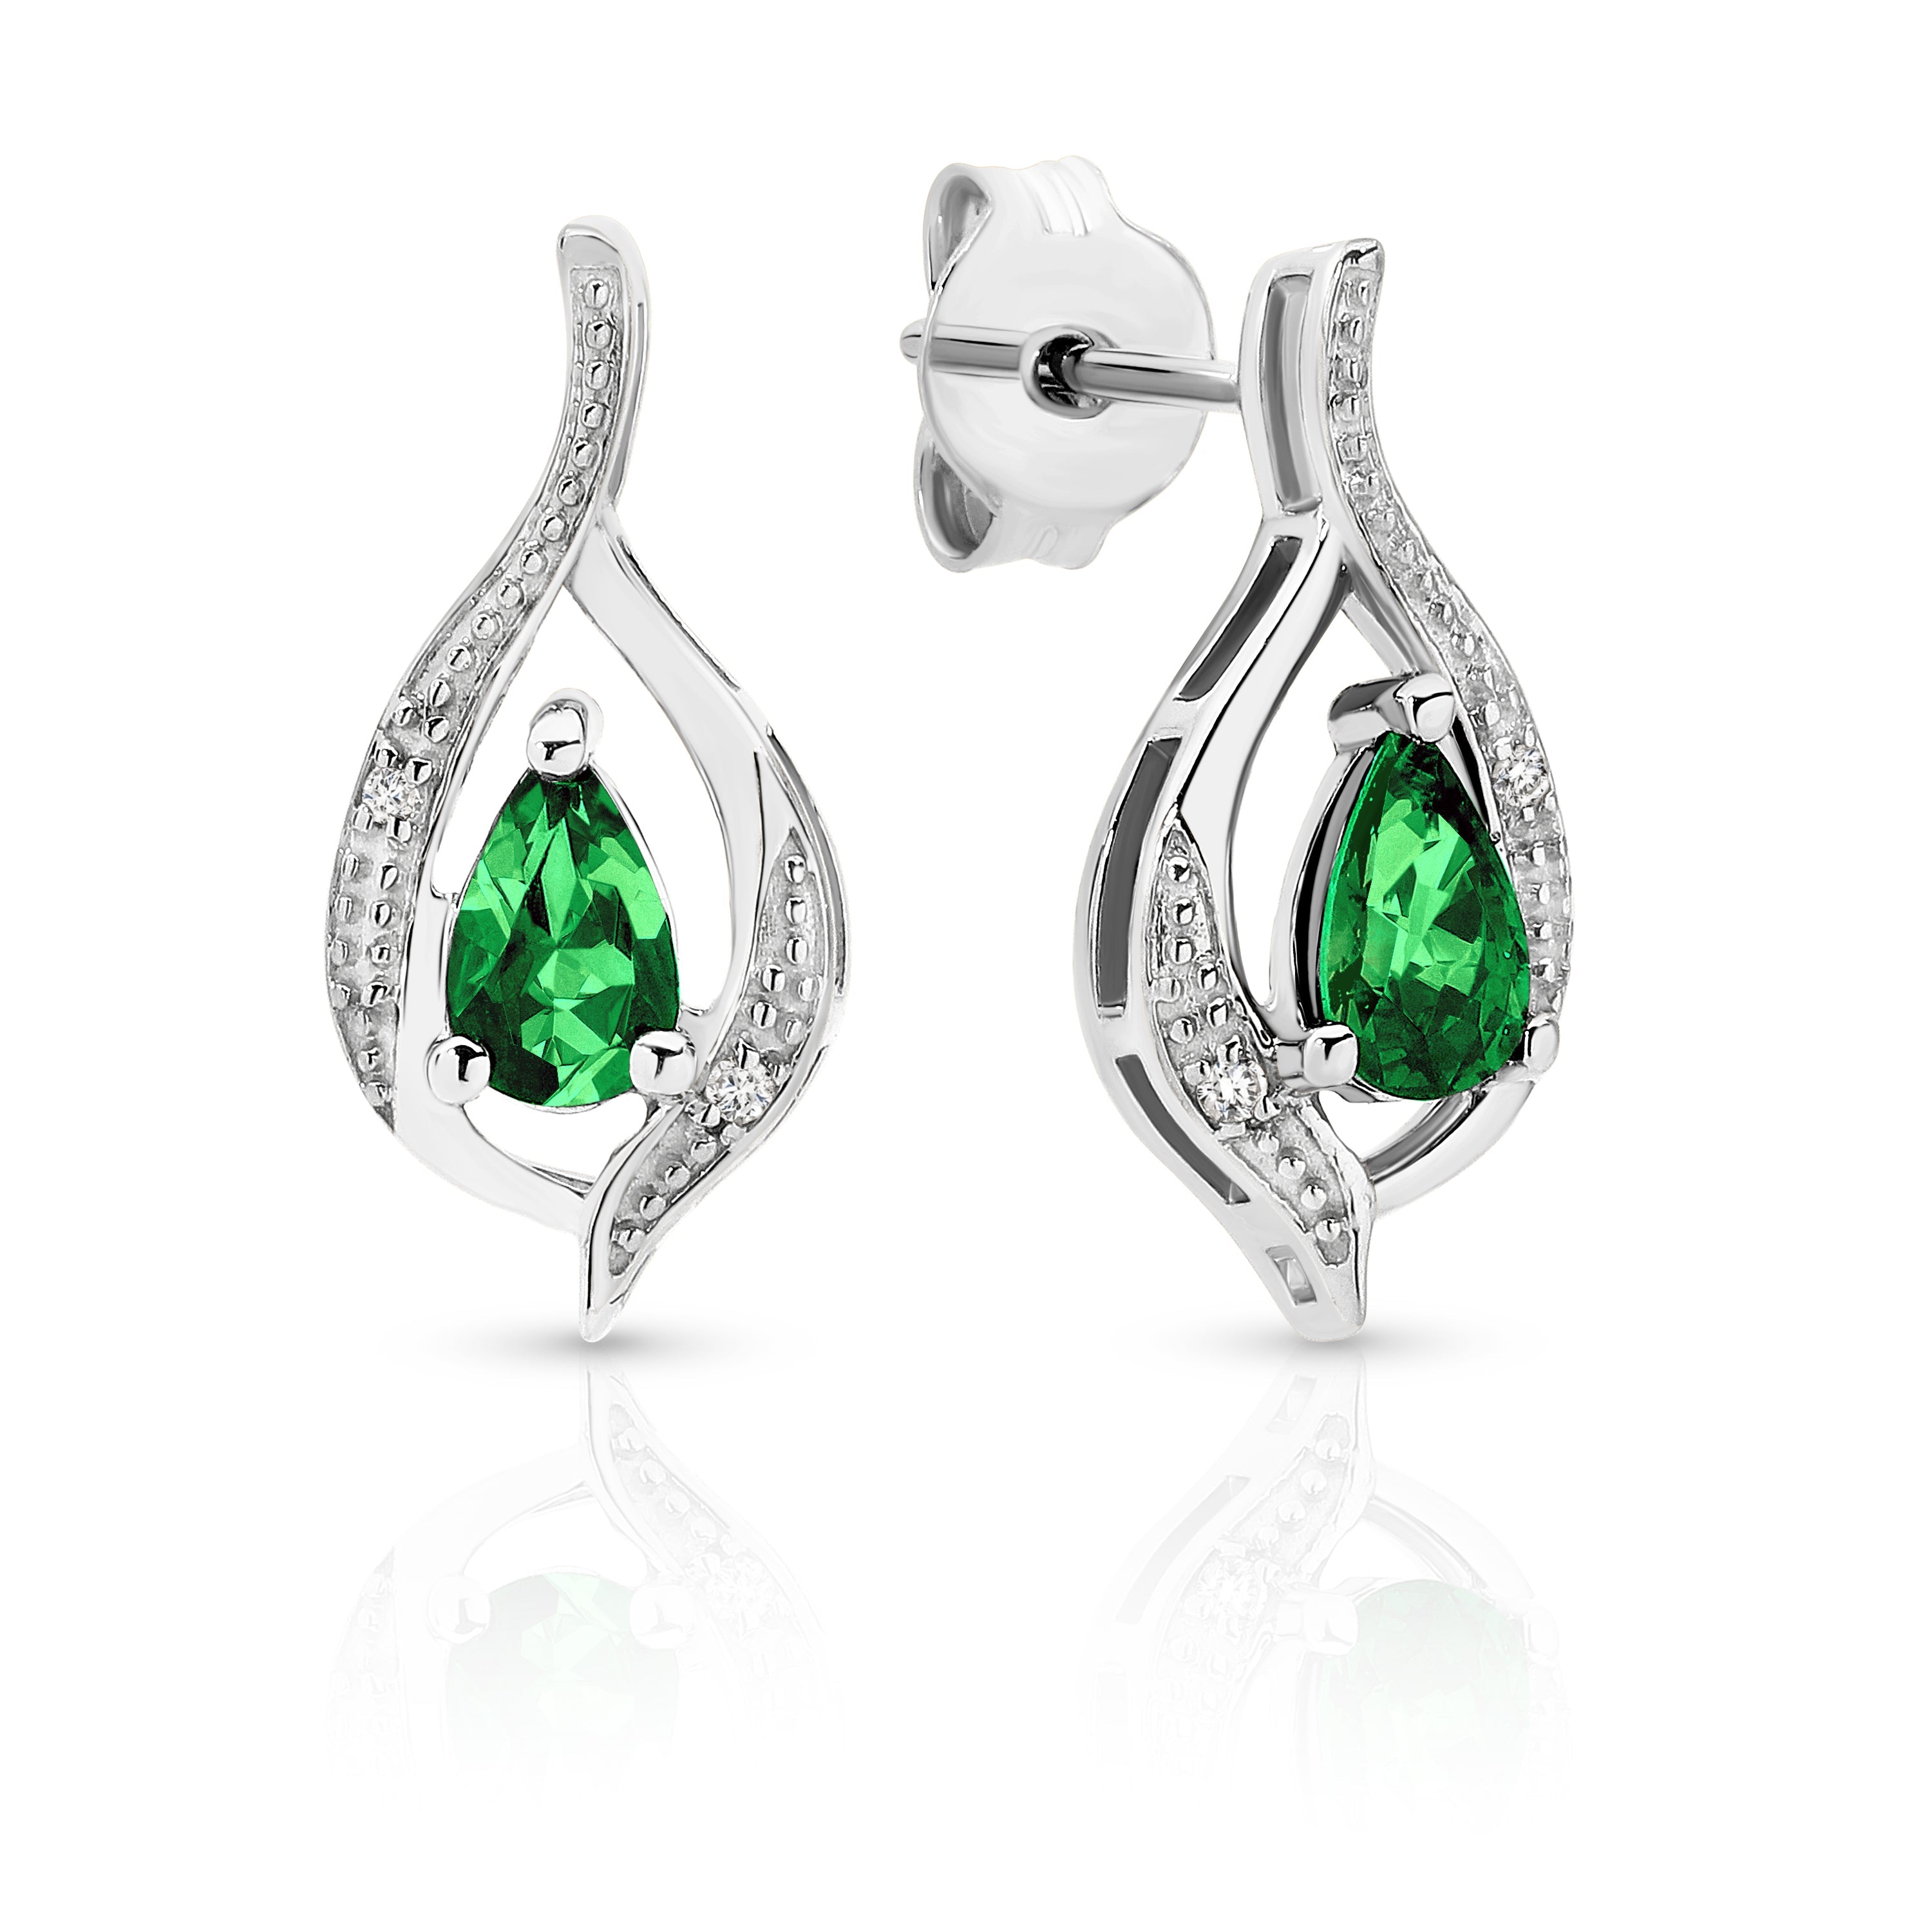 9ct white gold created emerald & diamond earrings